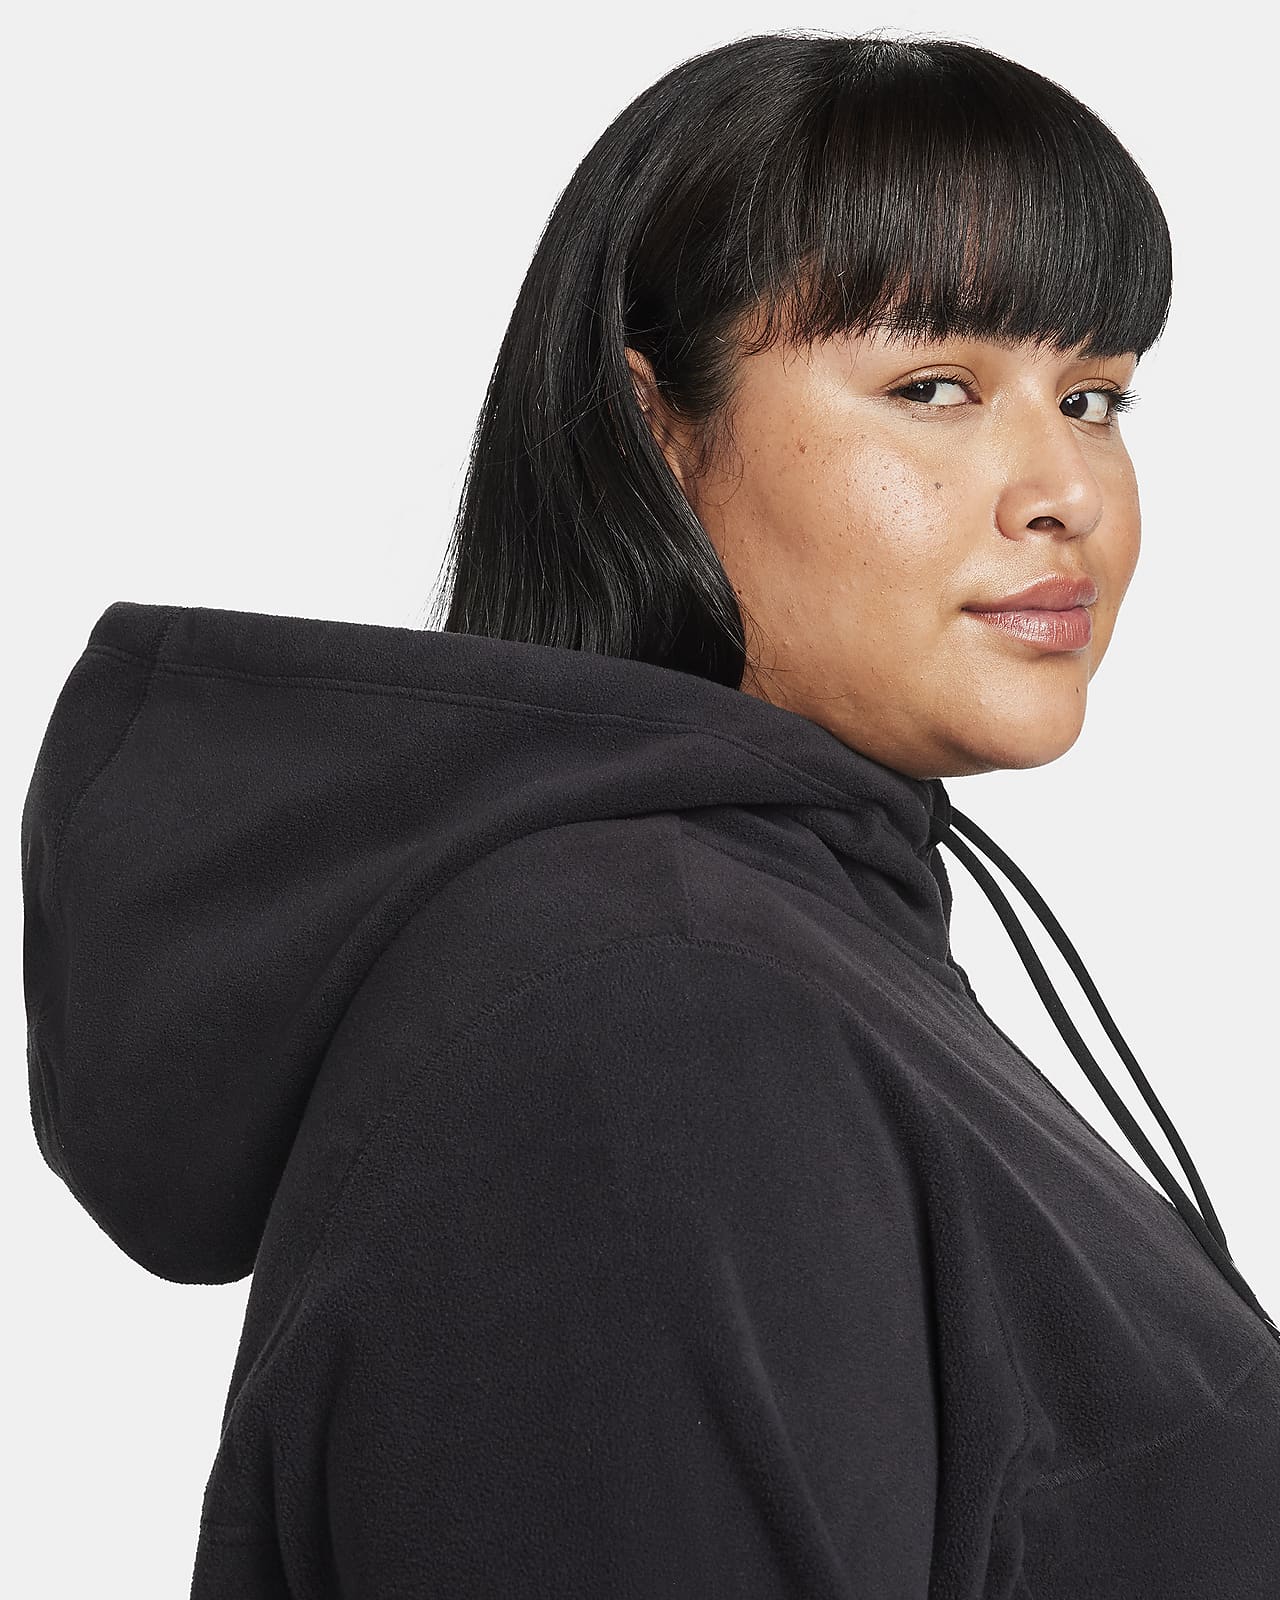 Nike Therma-FIT One Women's Oversized Full-Zip Fleece Hoodie (Plus Size)